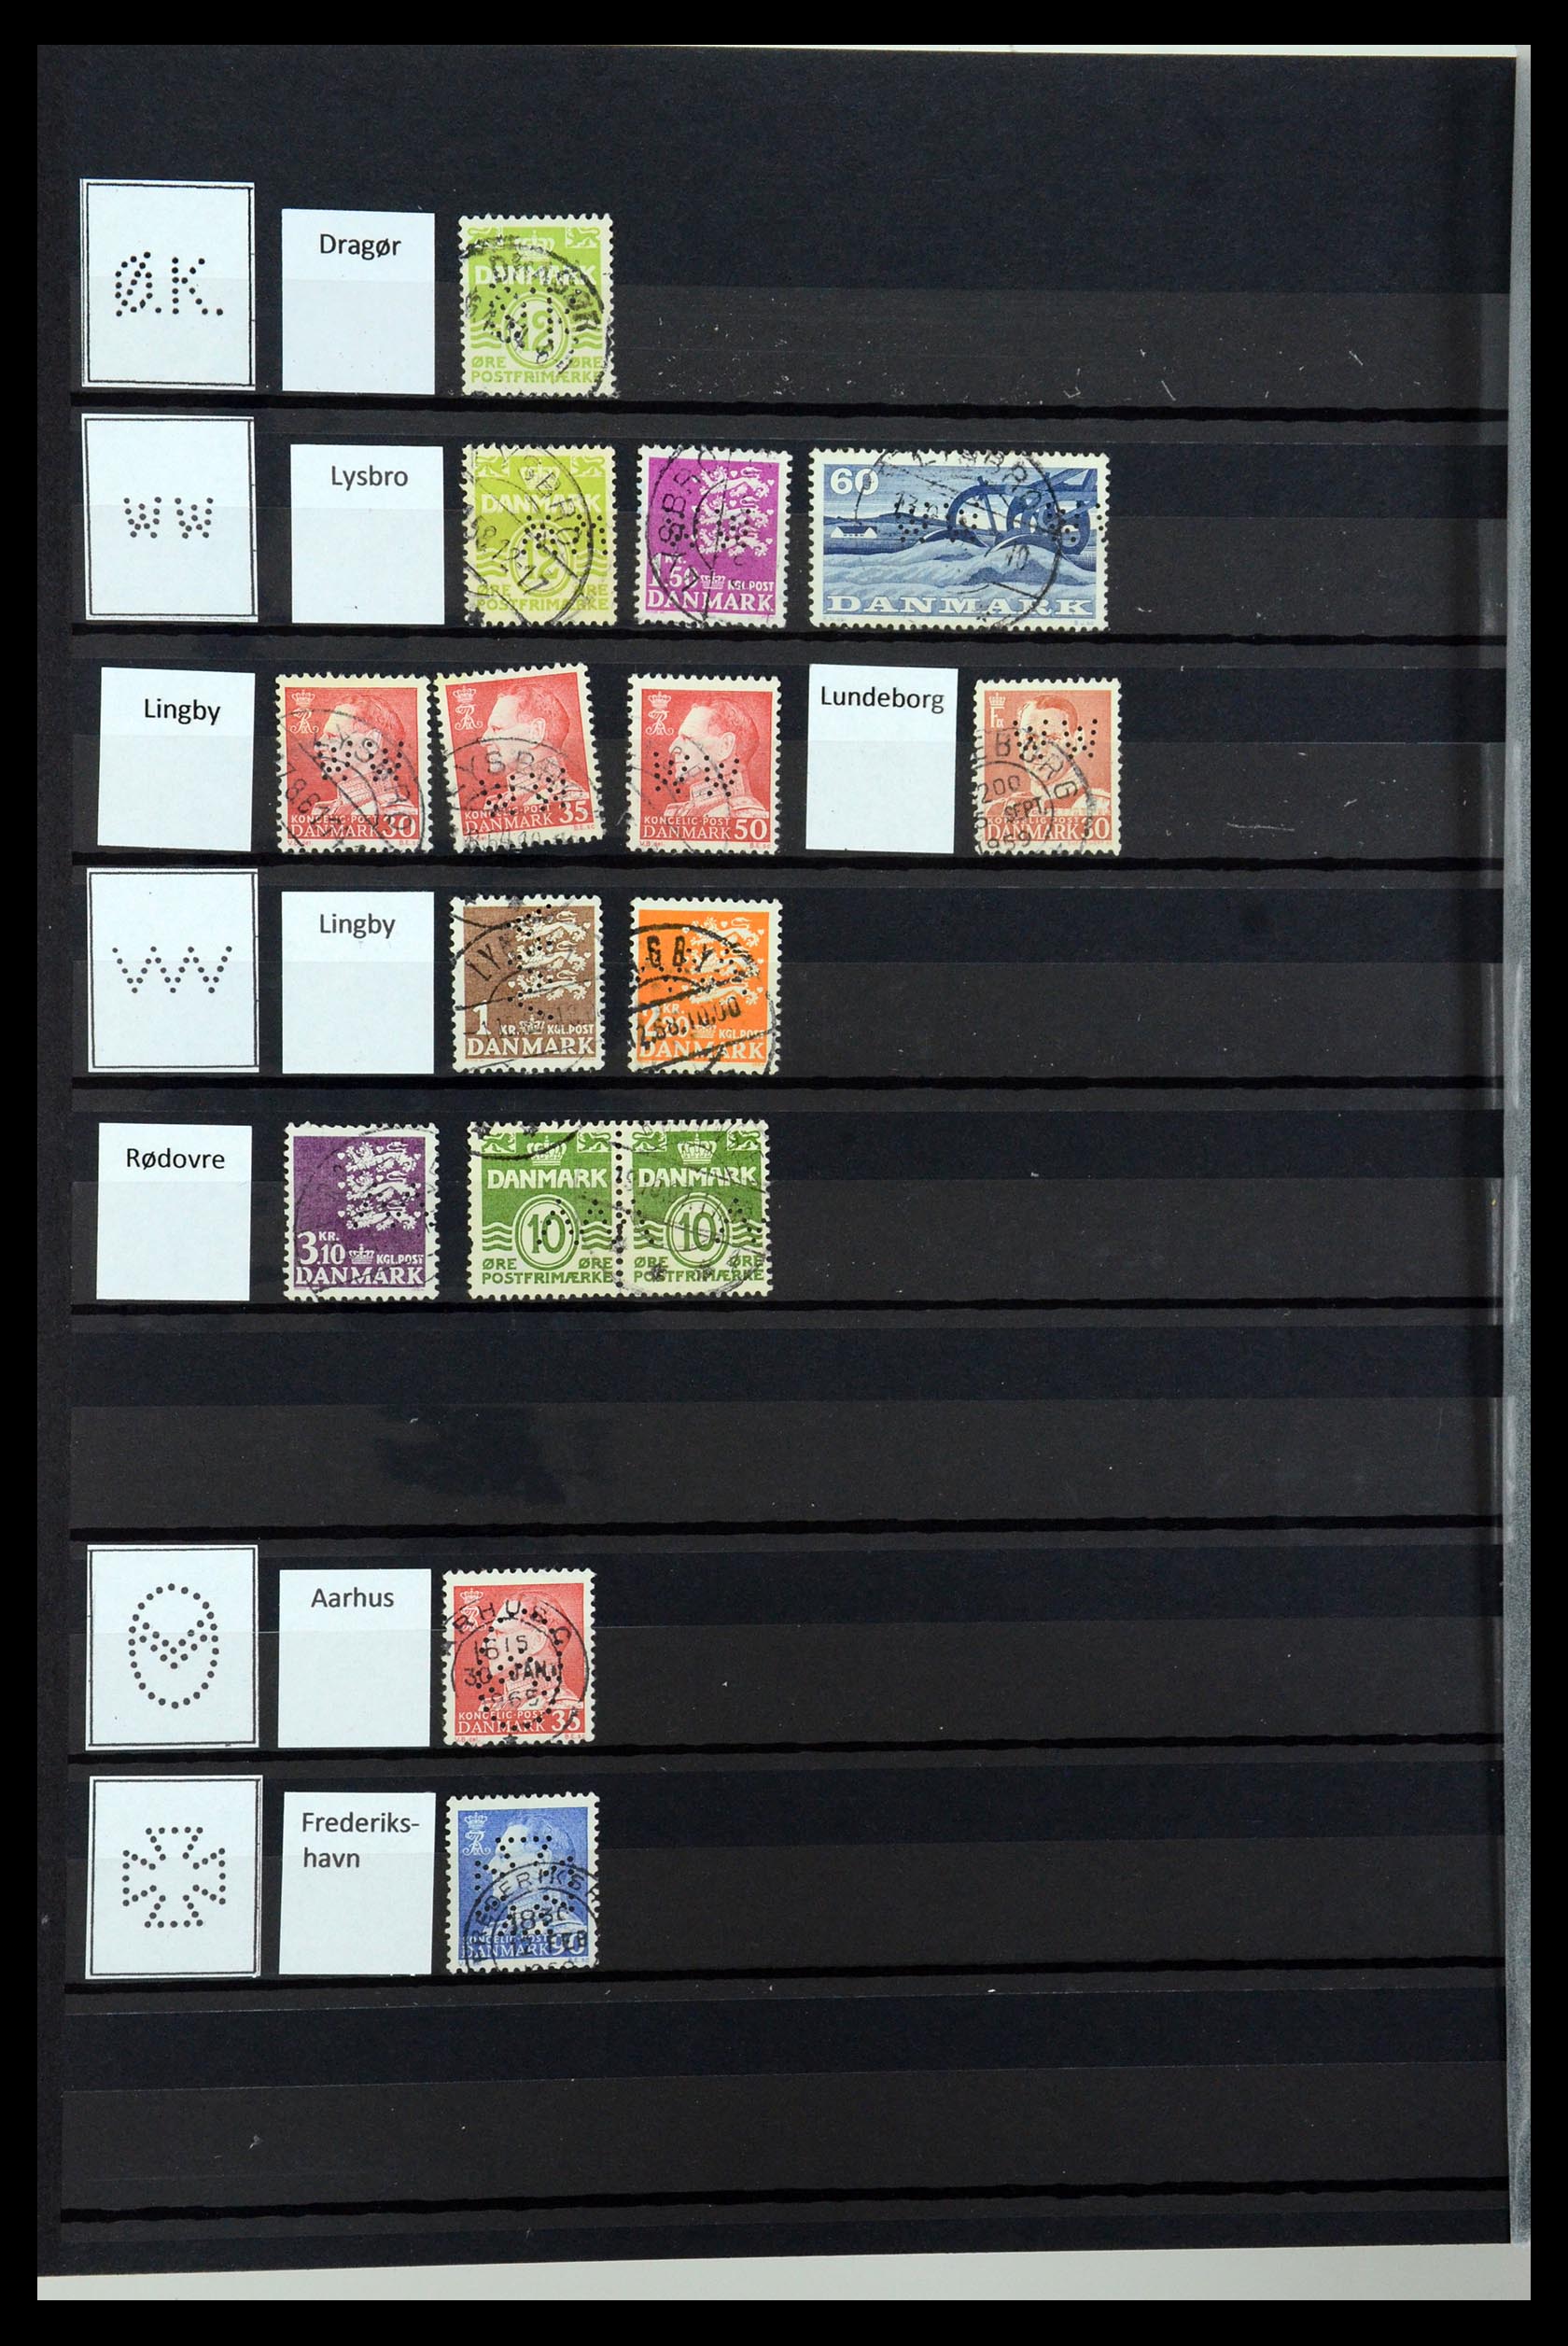 36396 111 - Stamp collection 36396 Denmark perfins.